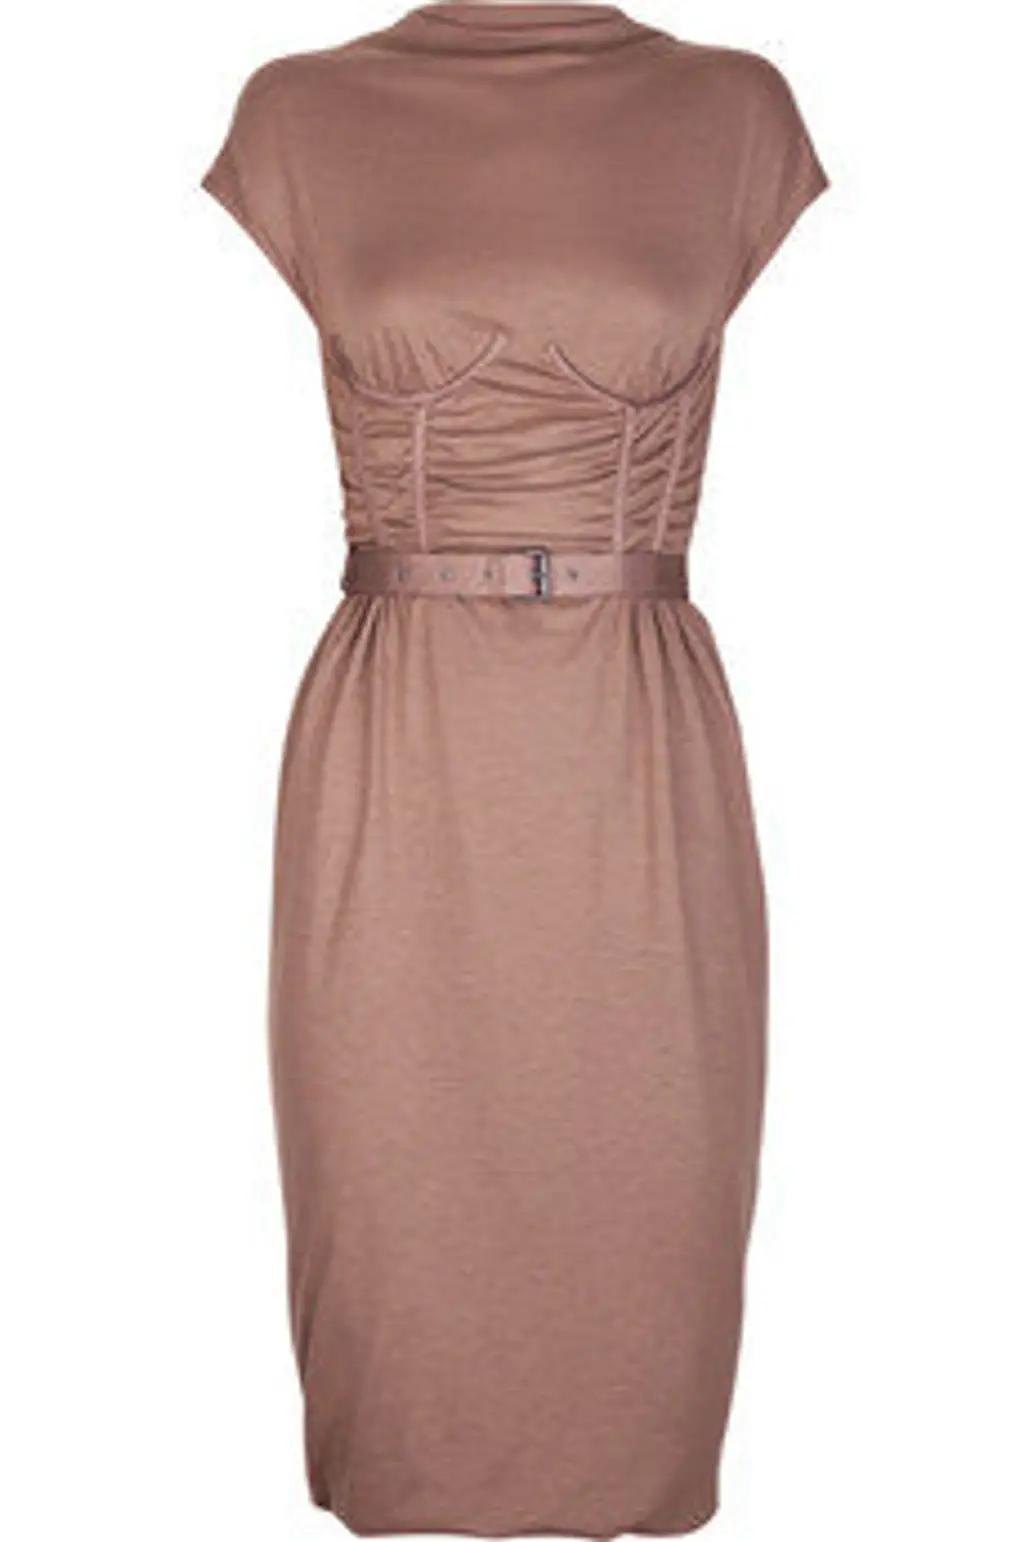 Bottega Veneta -Boned Cashmere Jersey Dress